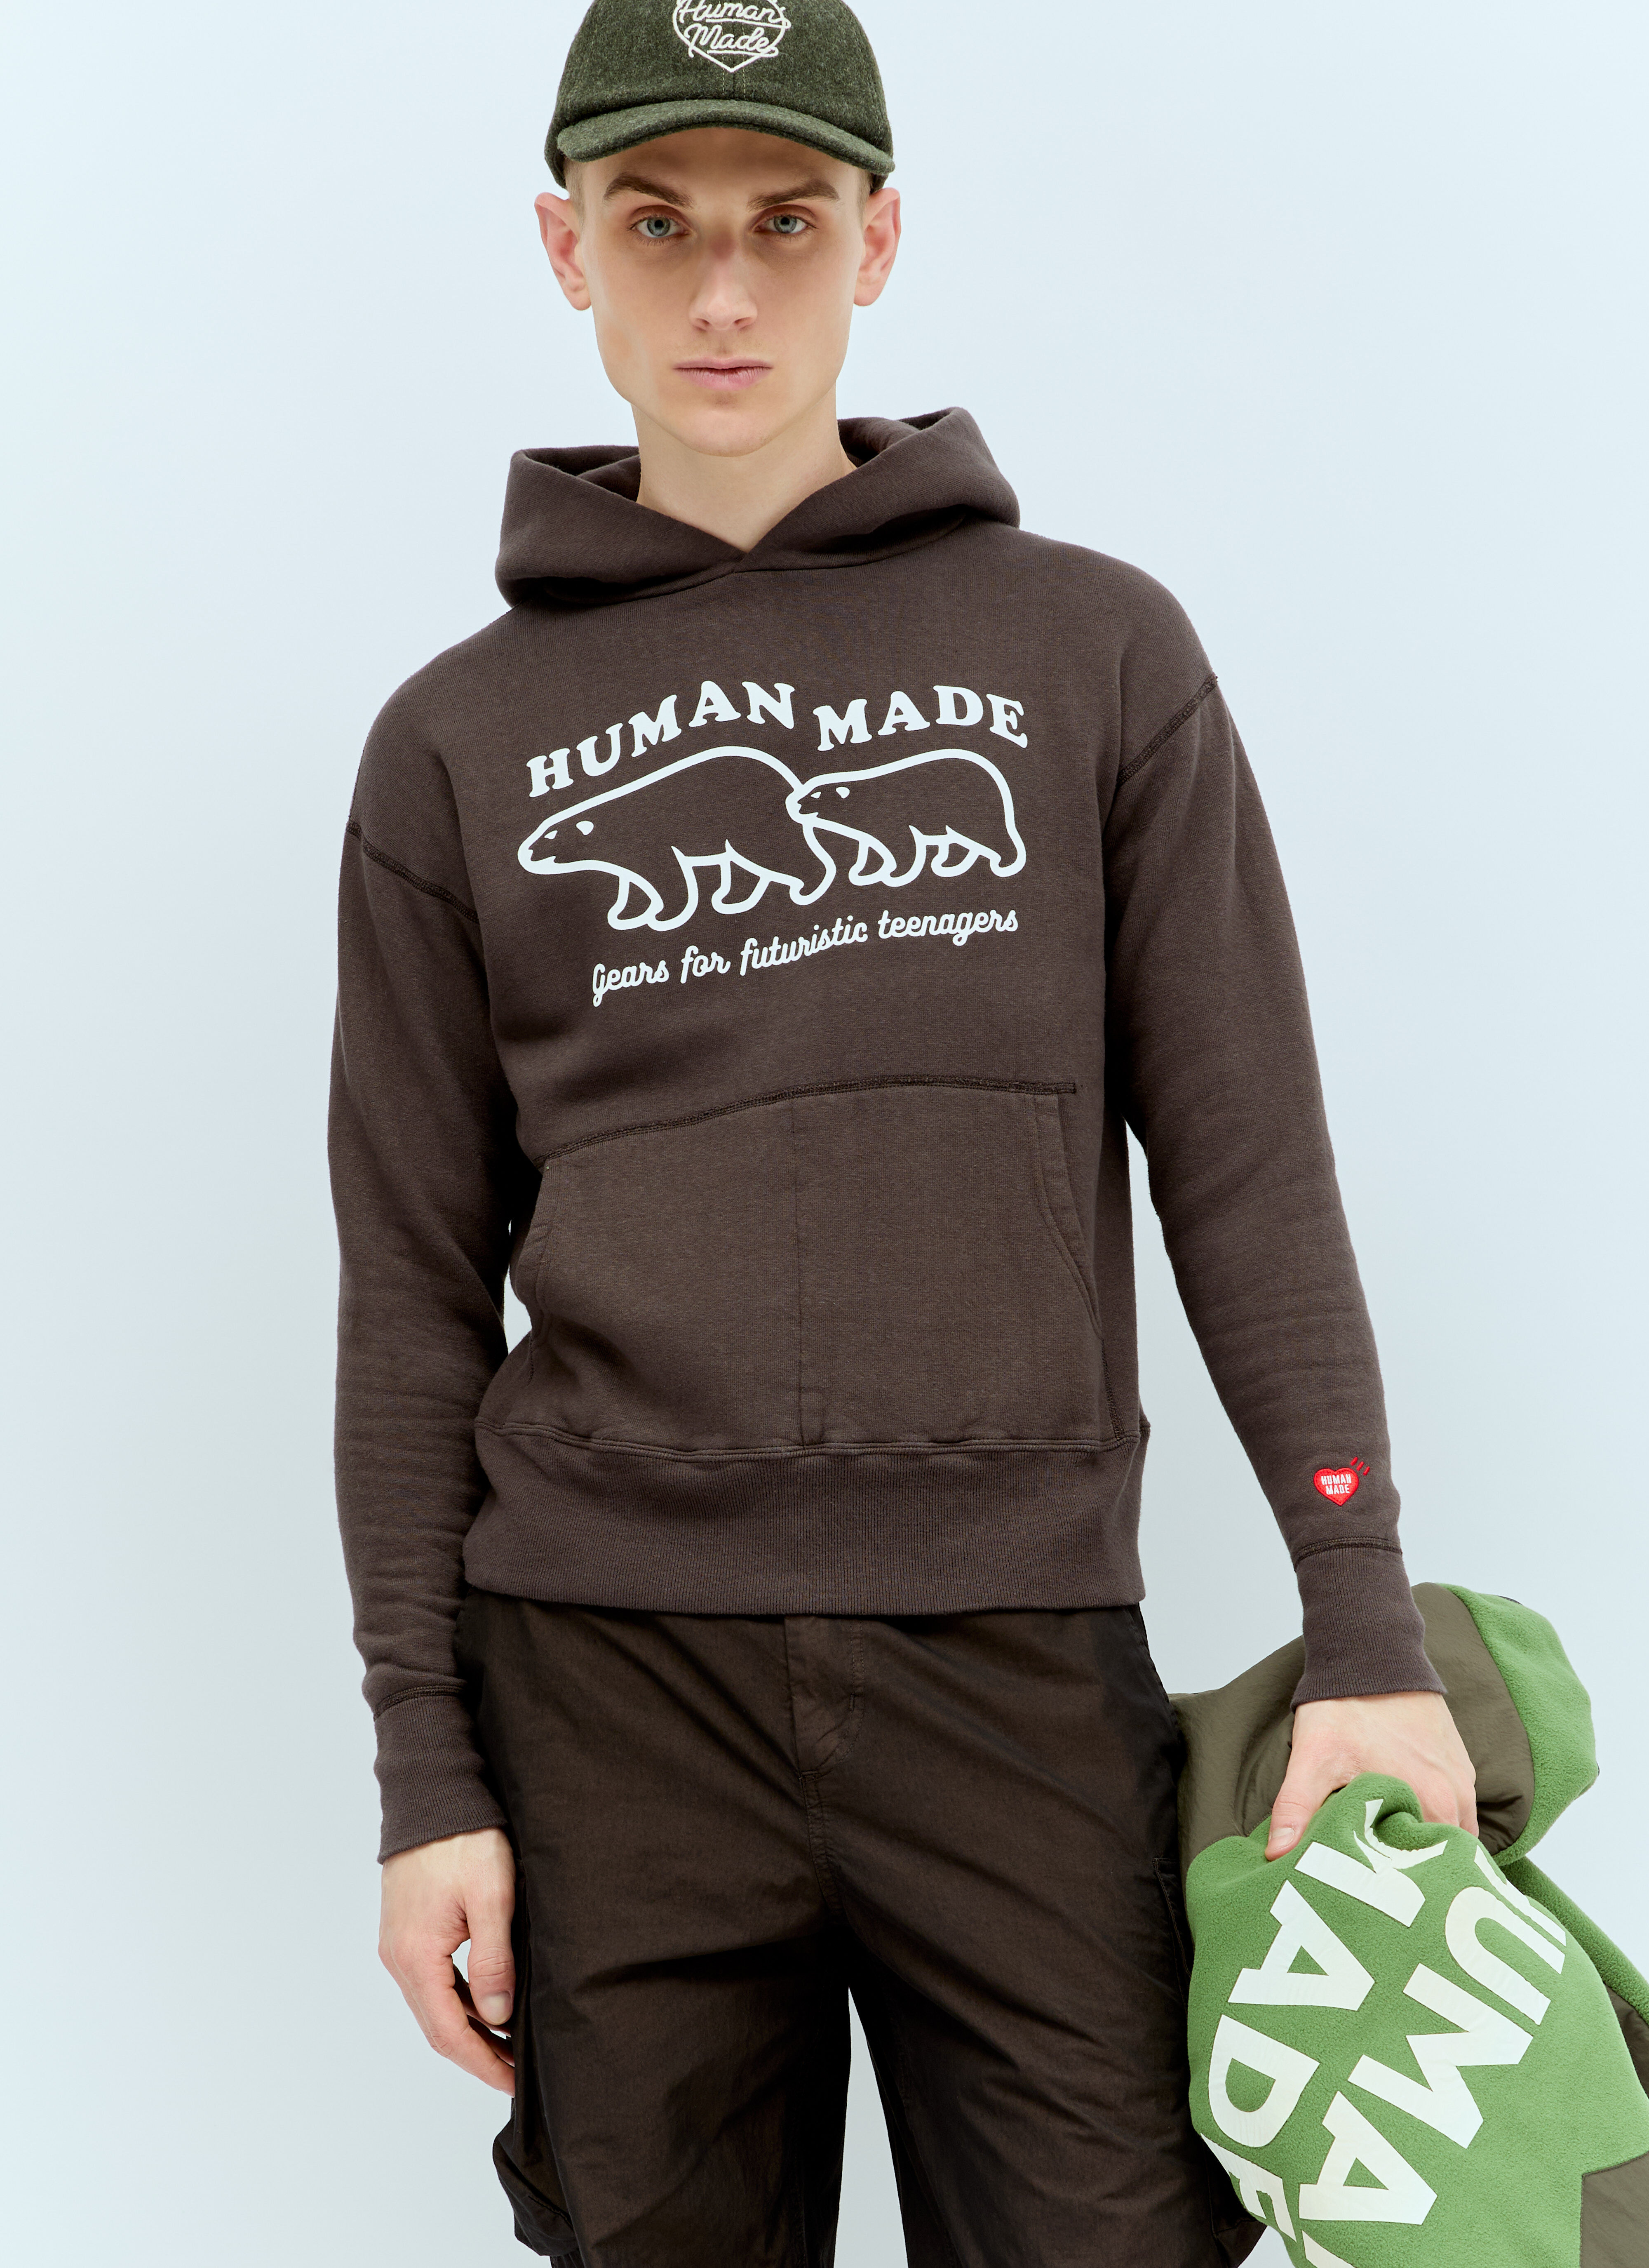 Human Made Tsuriami 连帽运动衫 Green hmd0156001